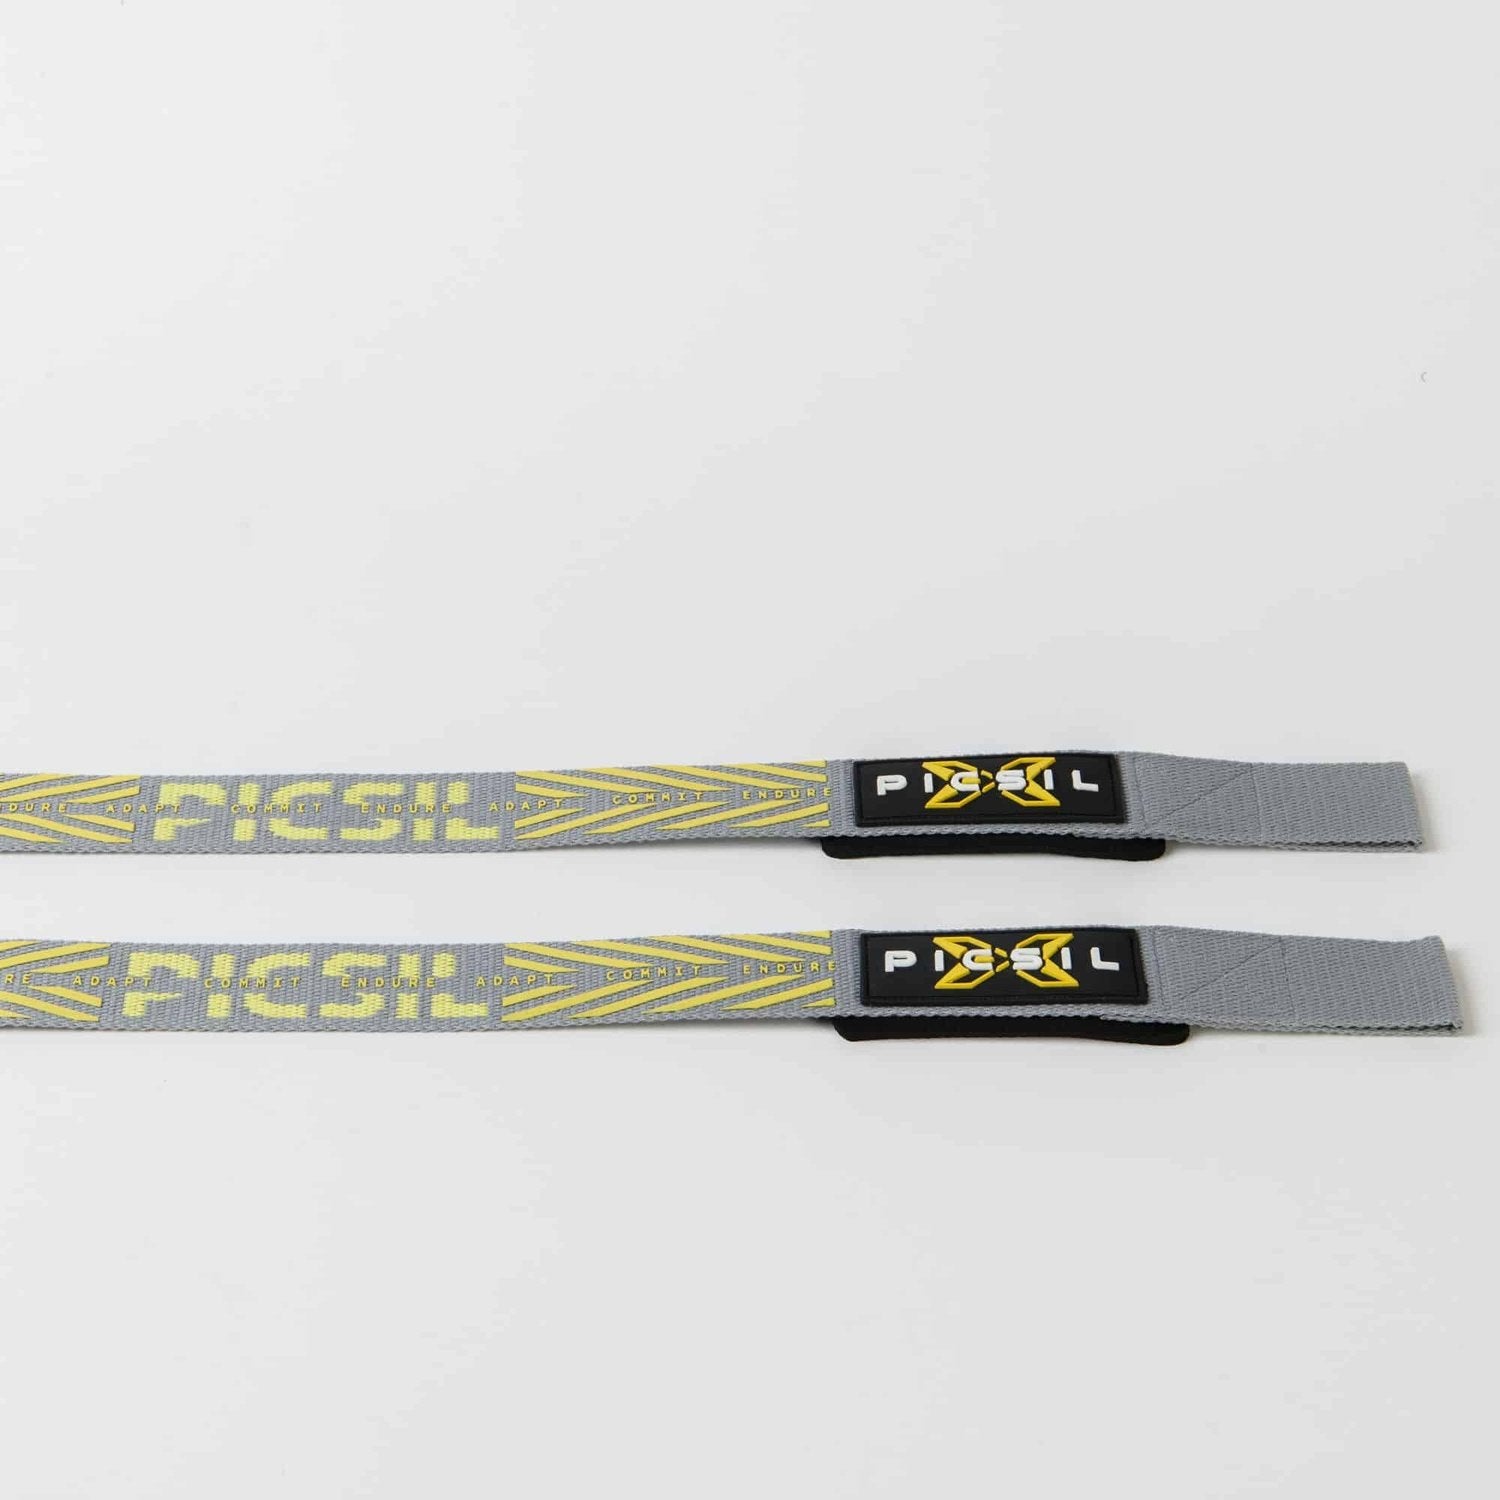 PicSil Lifting Straps (Zughilfen) Grau kaufen bei HighPowered.ch